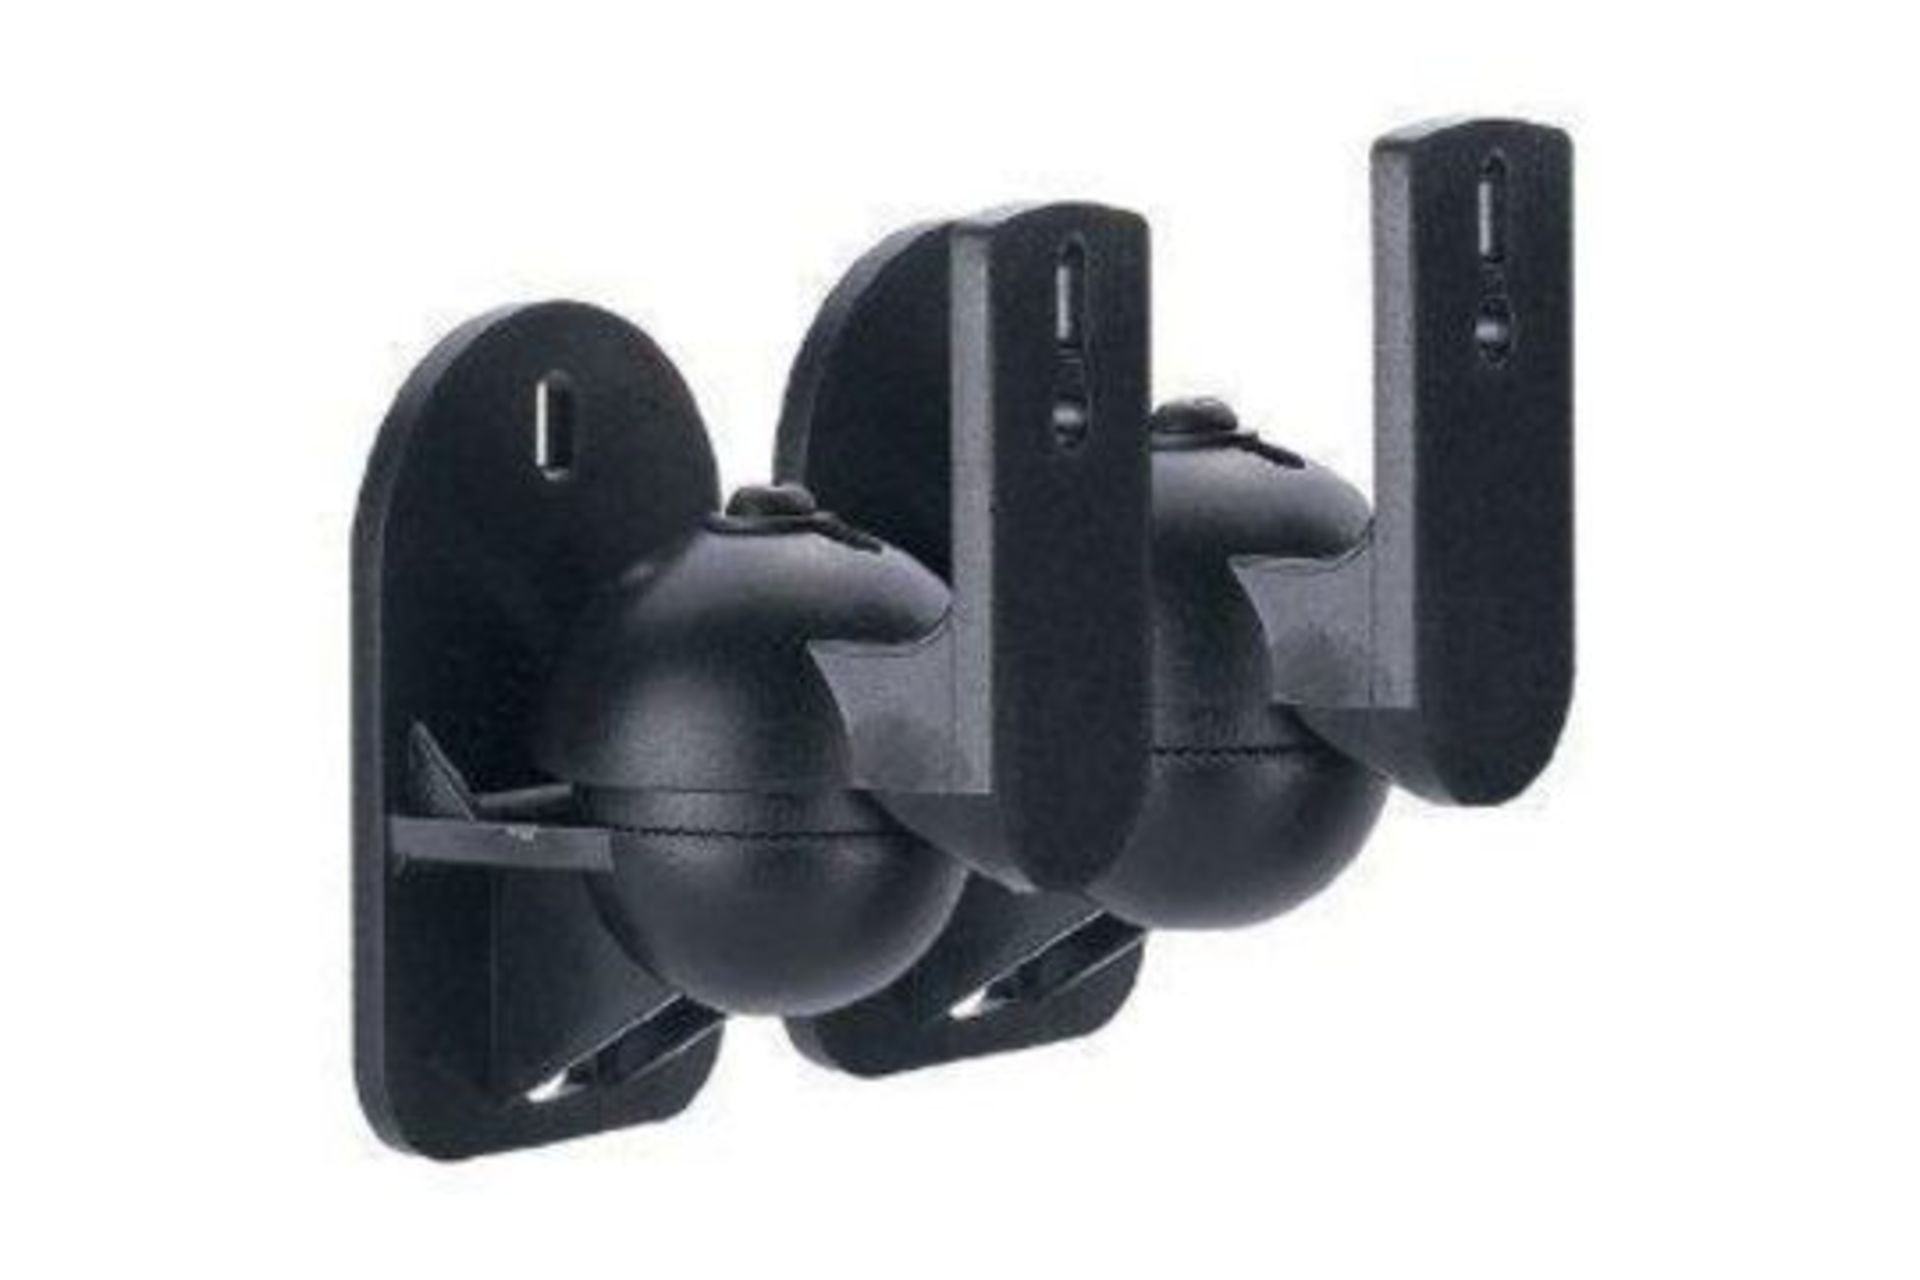 2x Speaker Bracket Set (SR3 1.1)2x Set of Mount your speakersEasily mount home cinema or satellite-